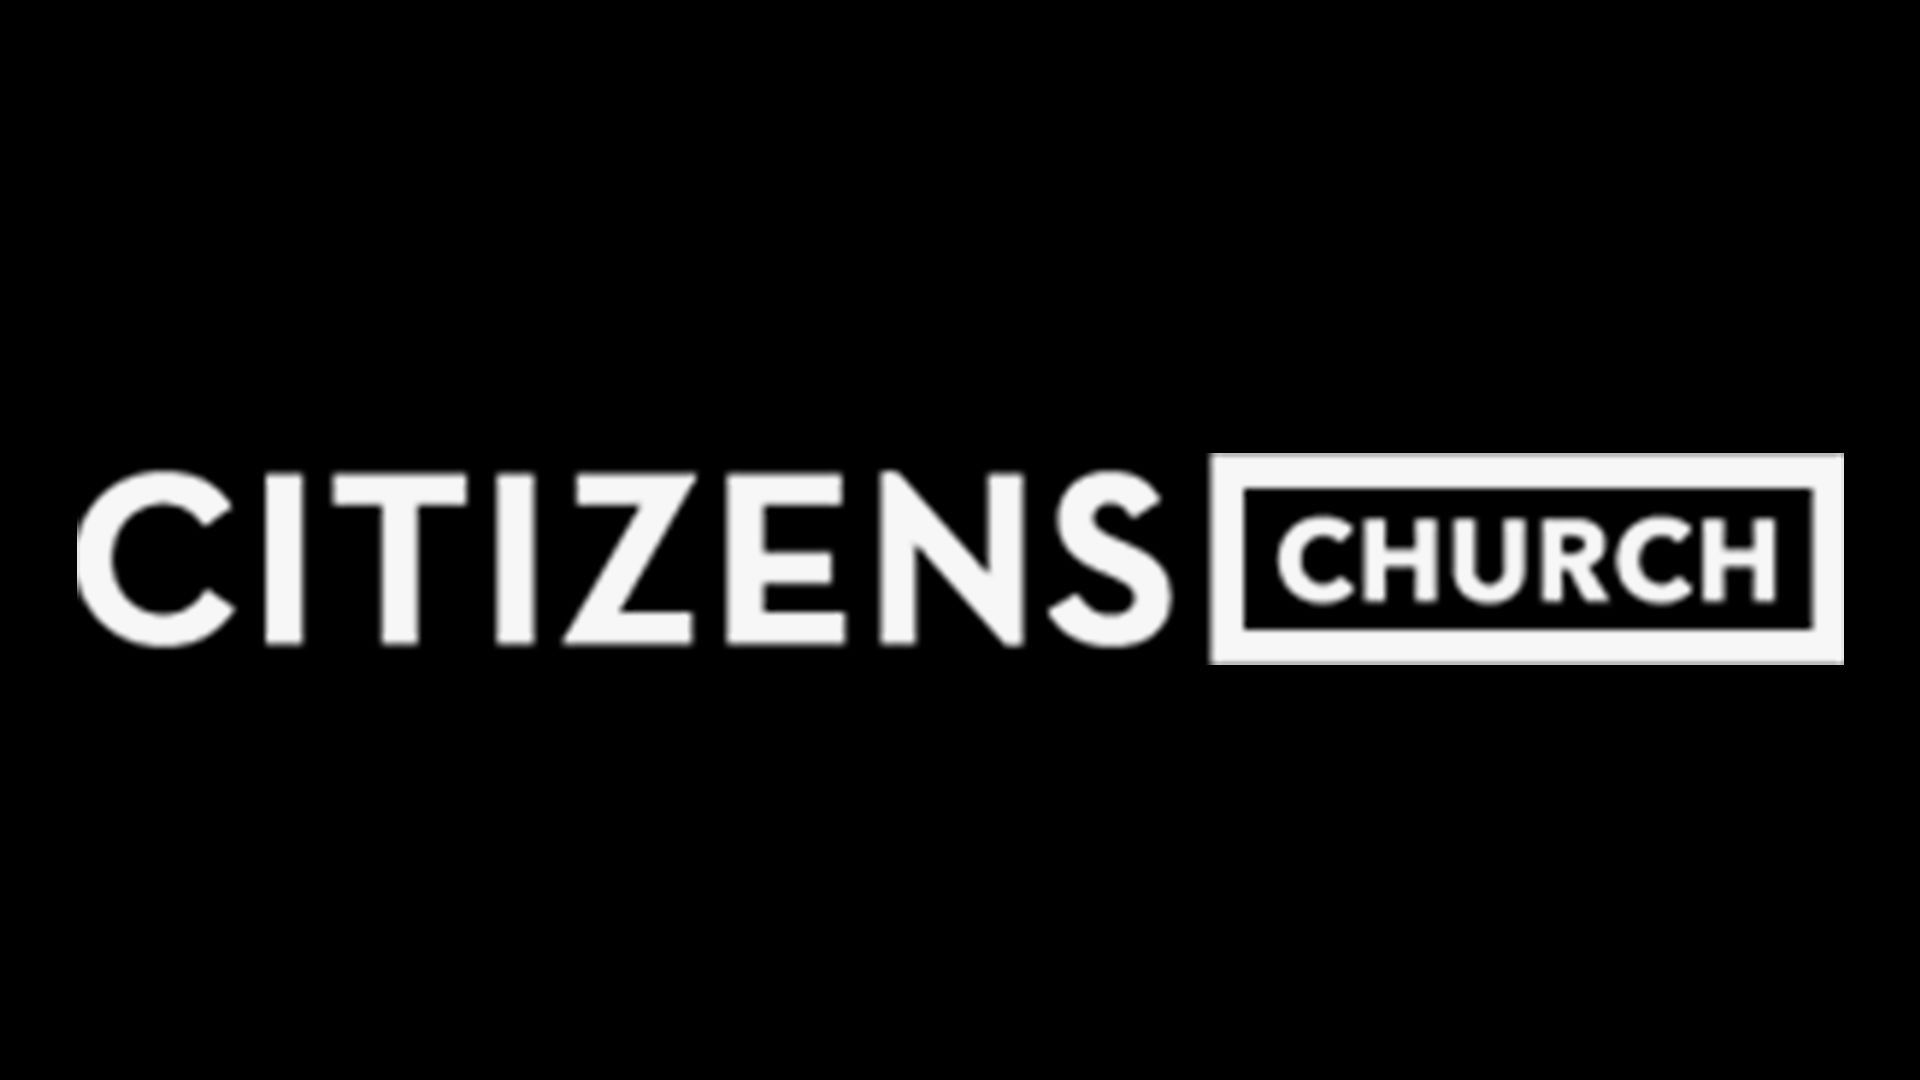 citizens church black white logo